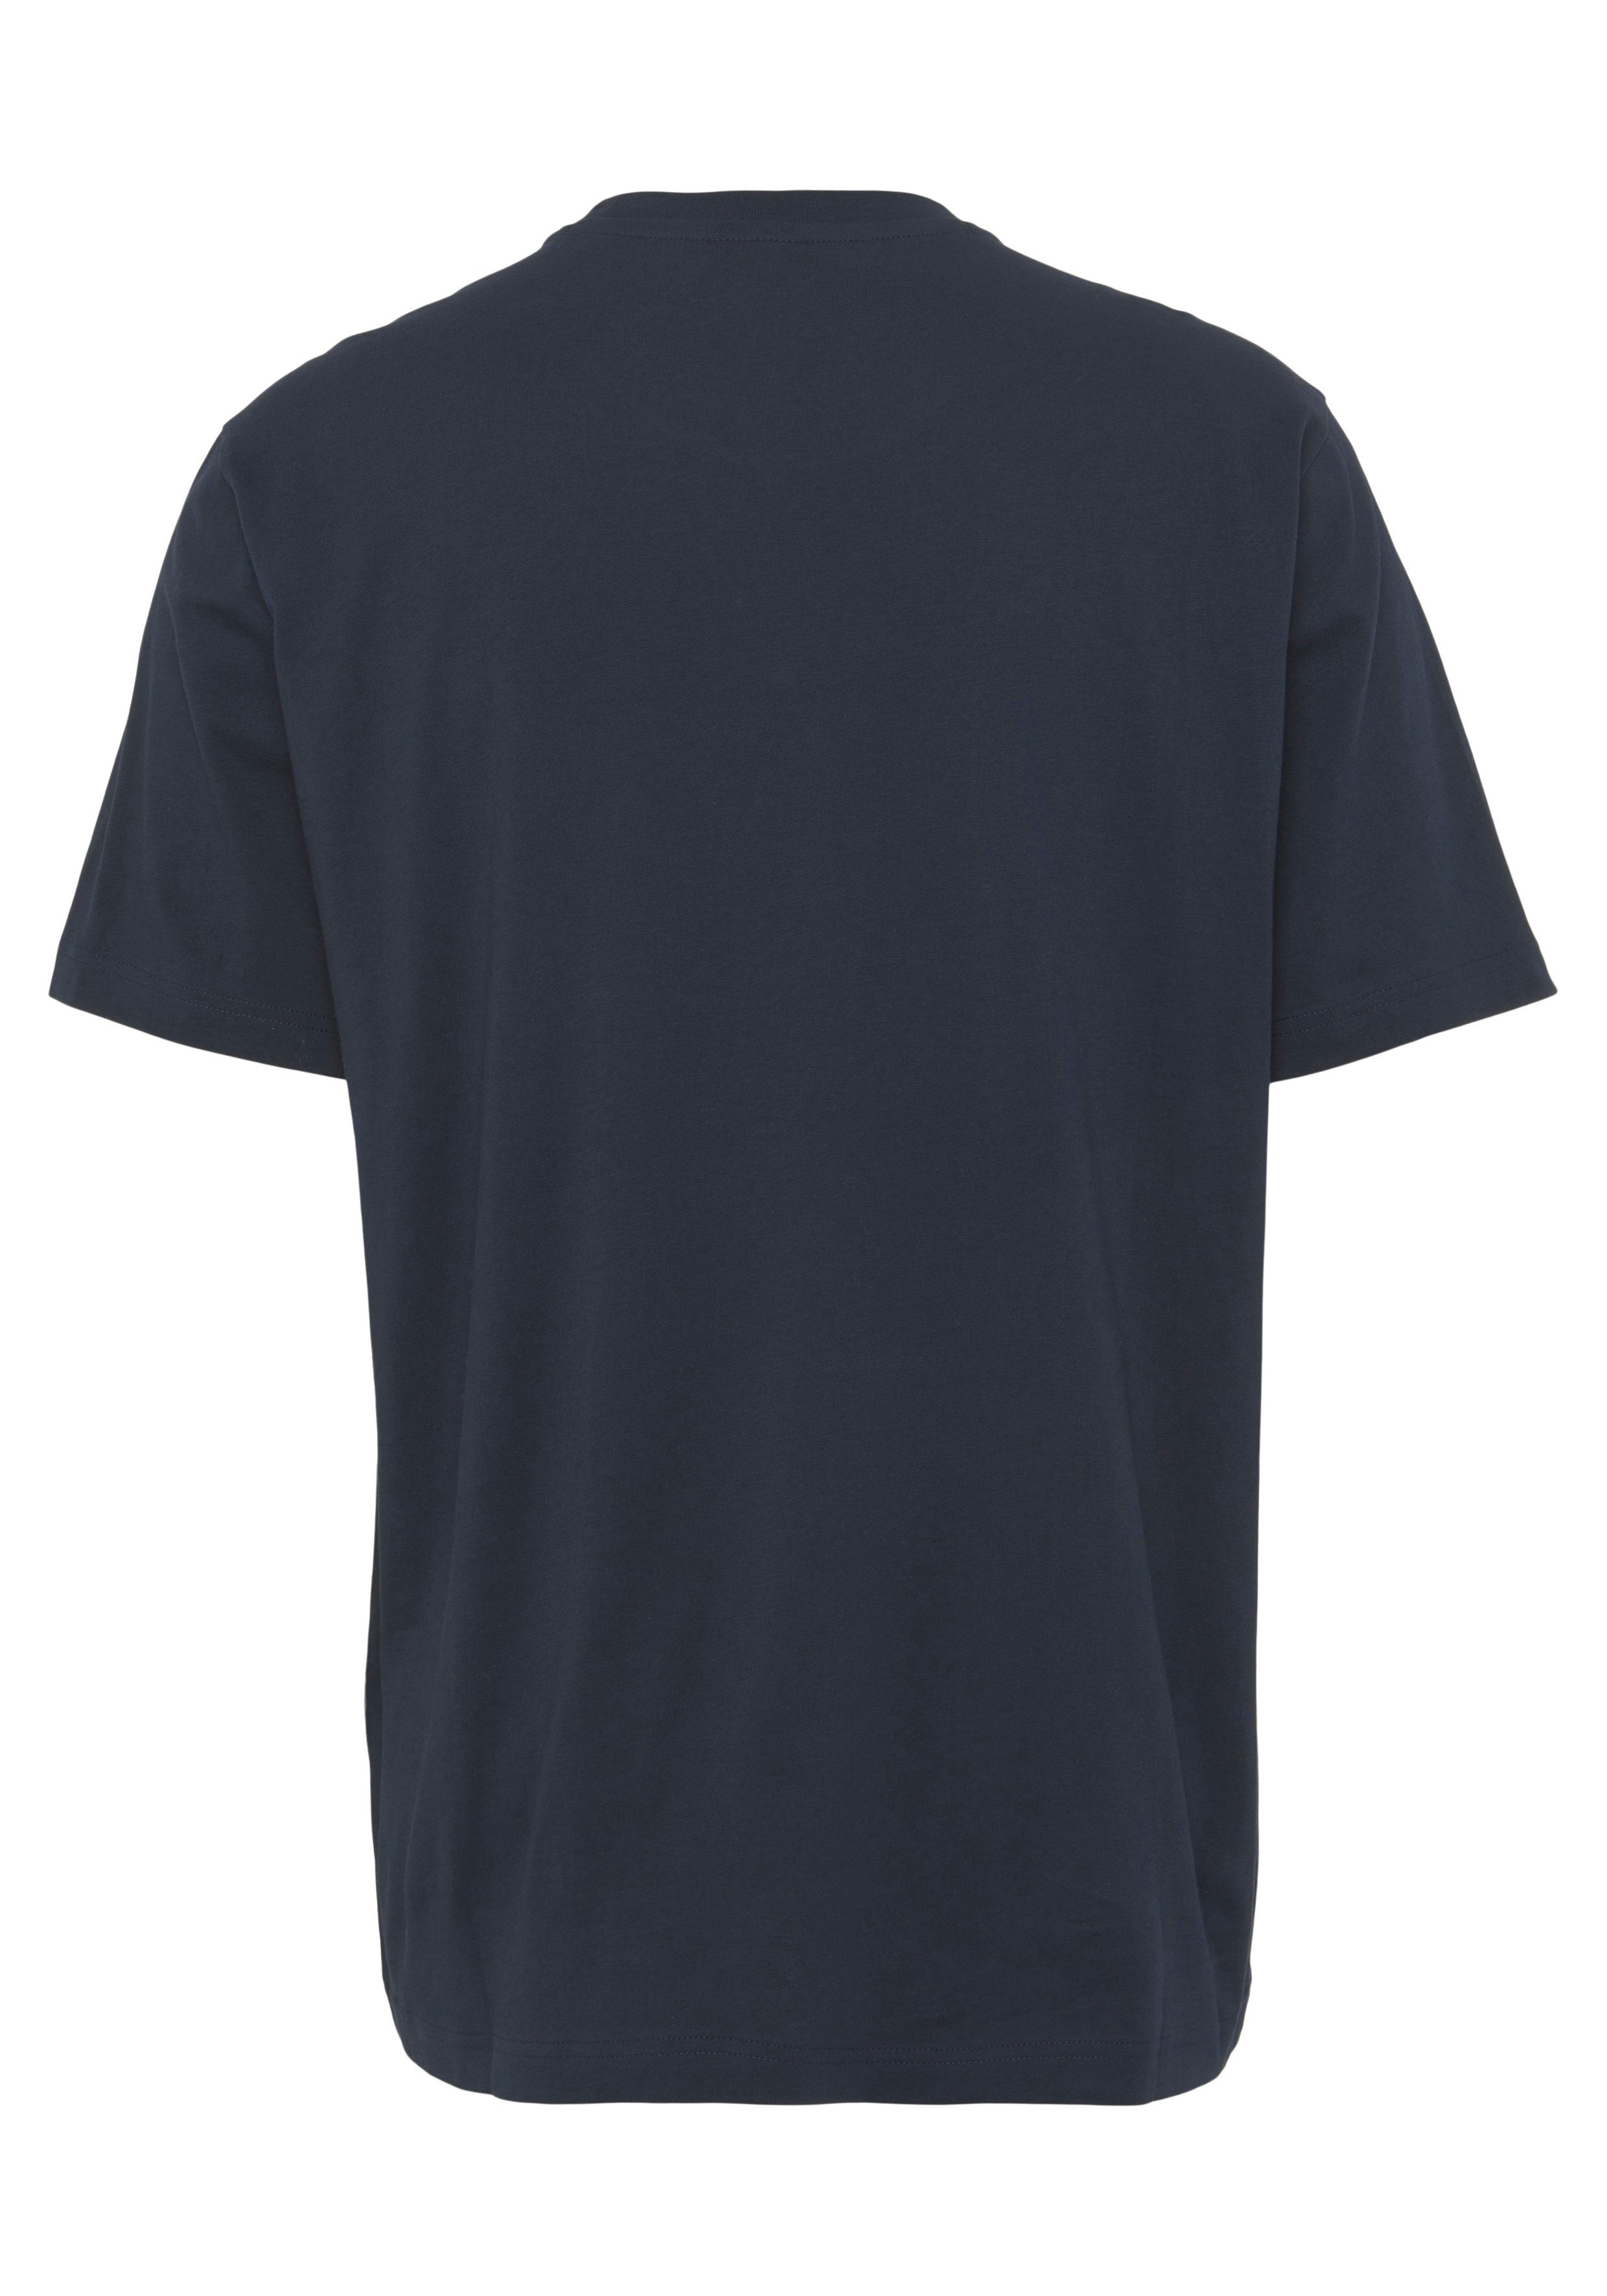 Champion T-Shirt Classic large Logo T-Shirt marine Crewneck